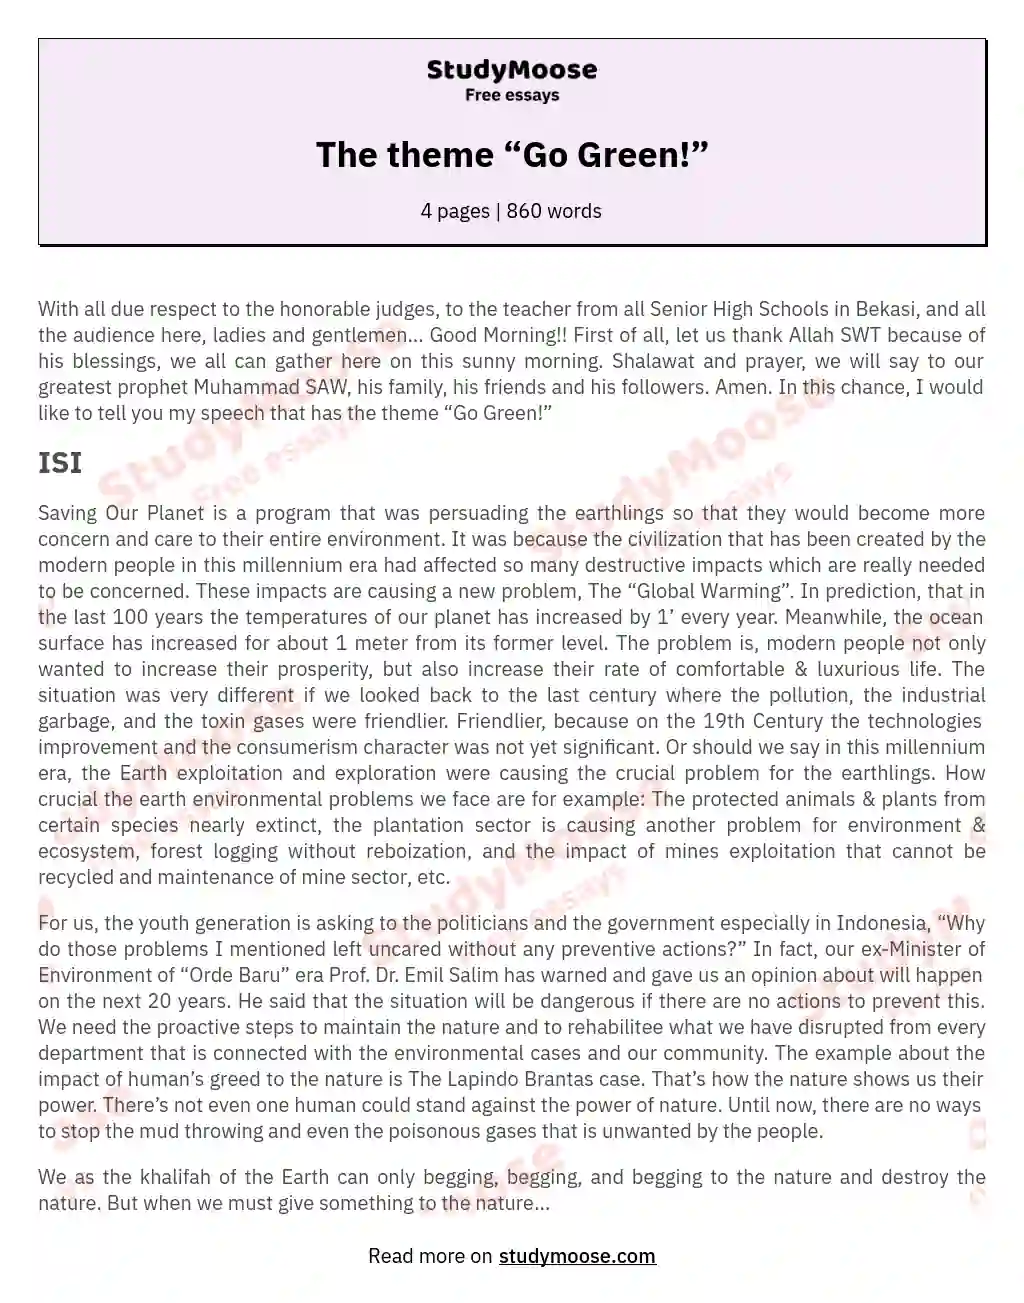 The theme “Go Green!” essay